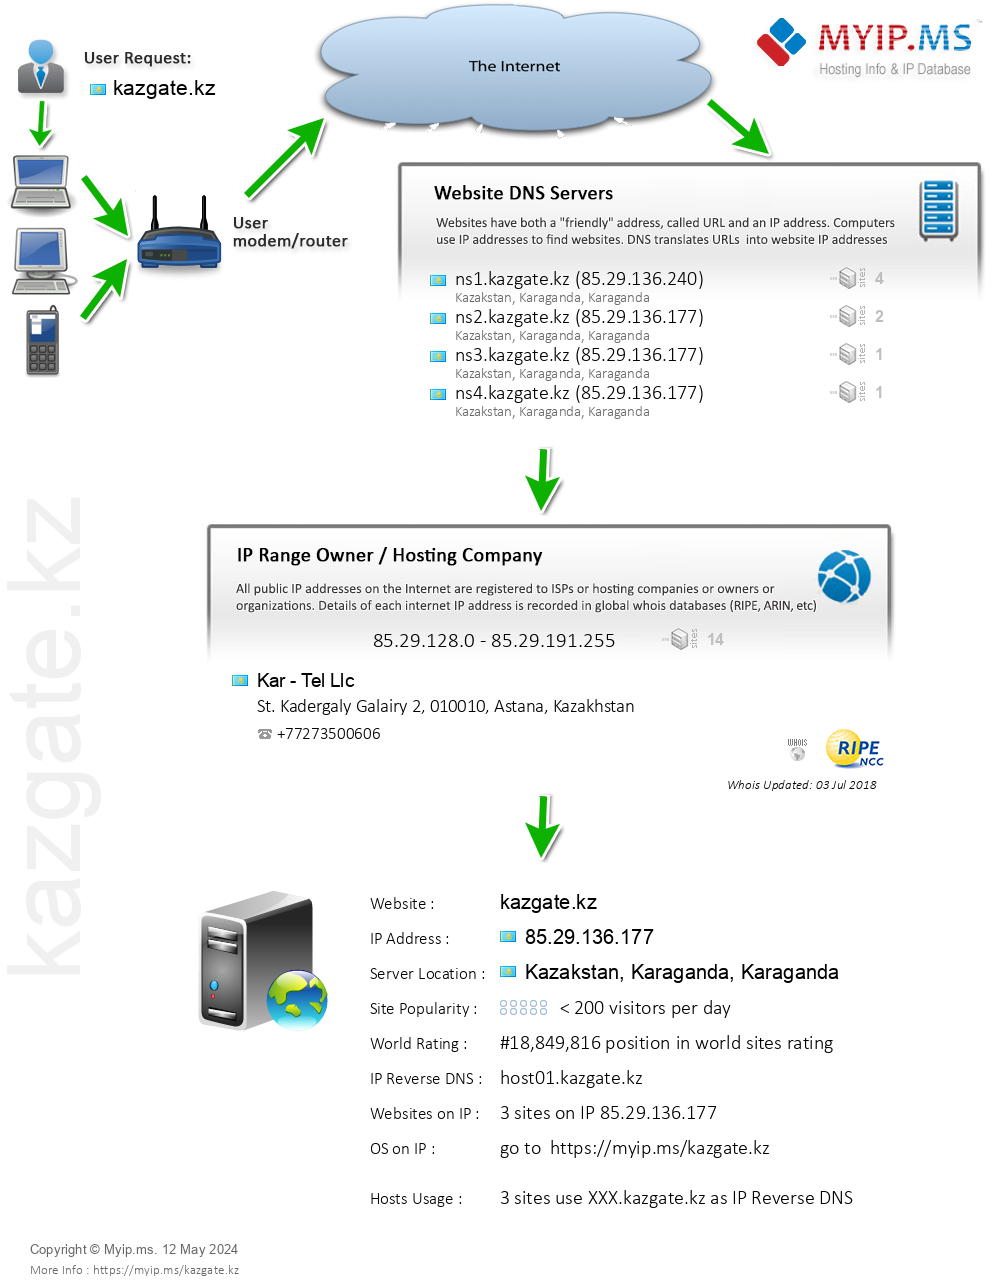 Kazgate.kz - Website Hosting Visual IP Diagram